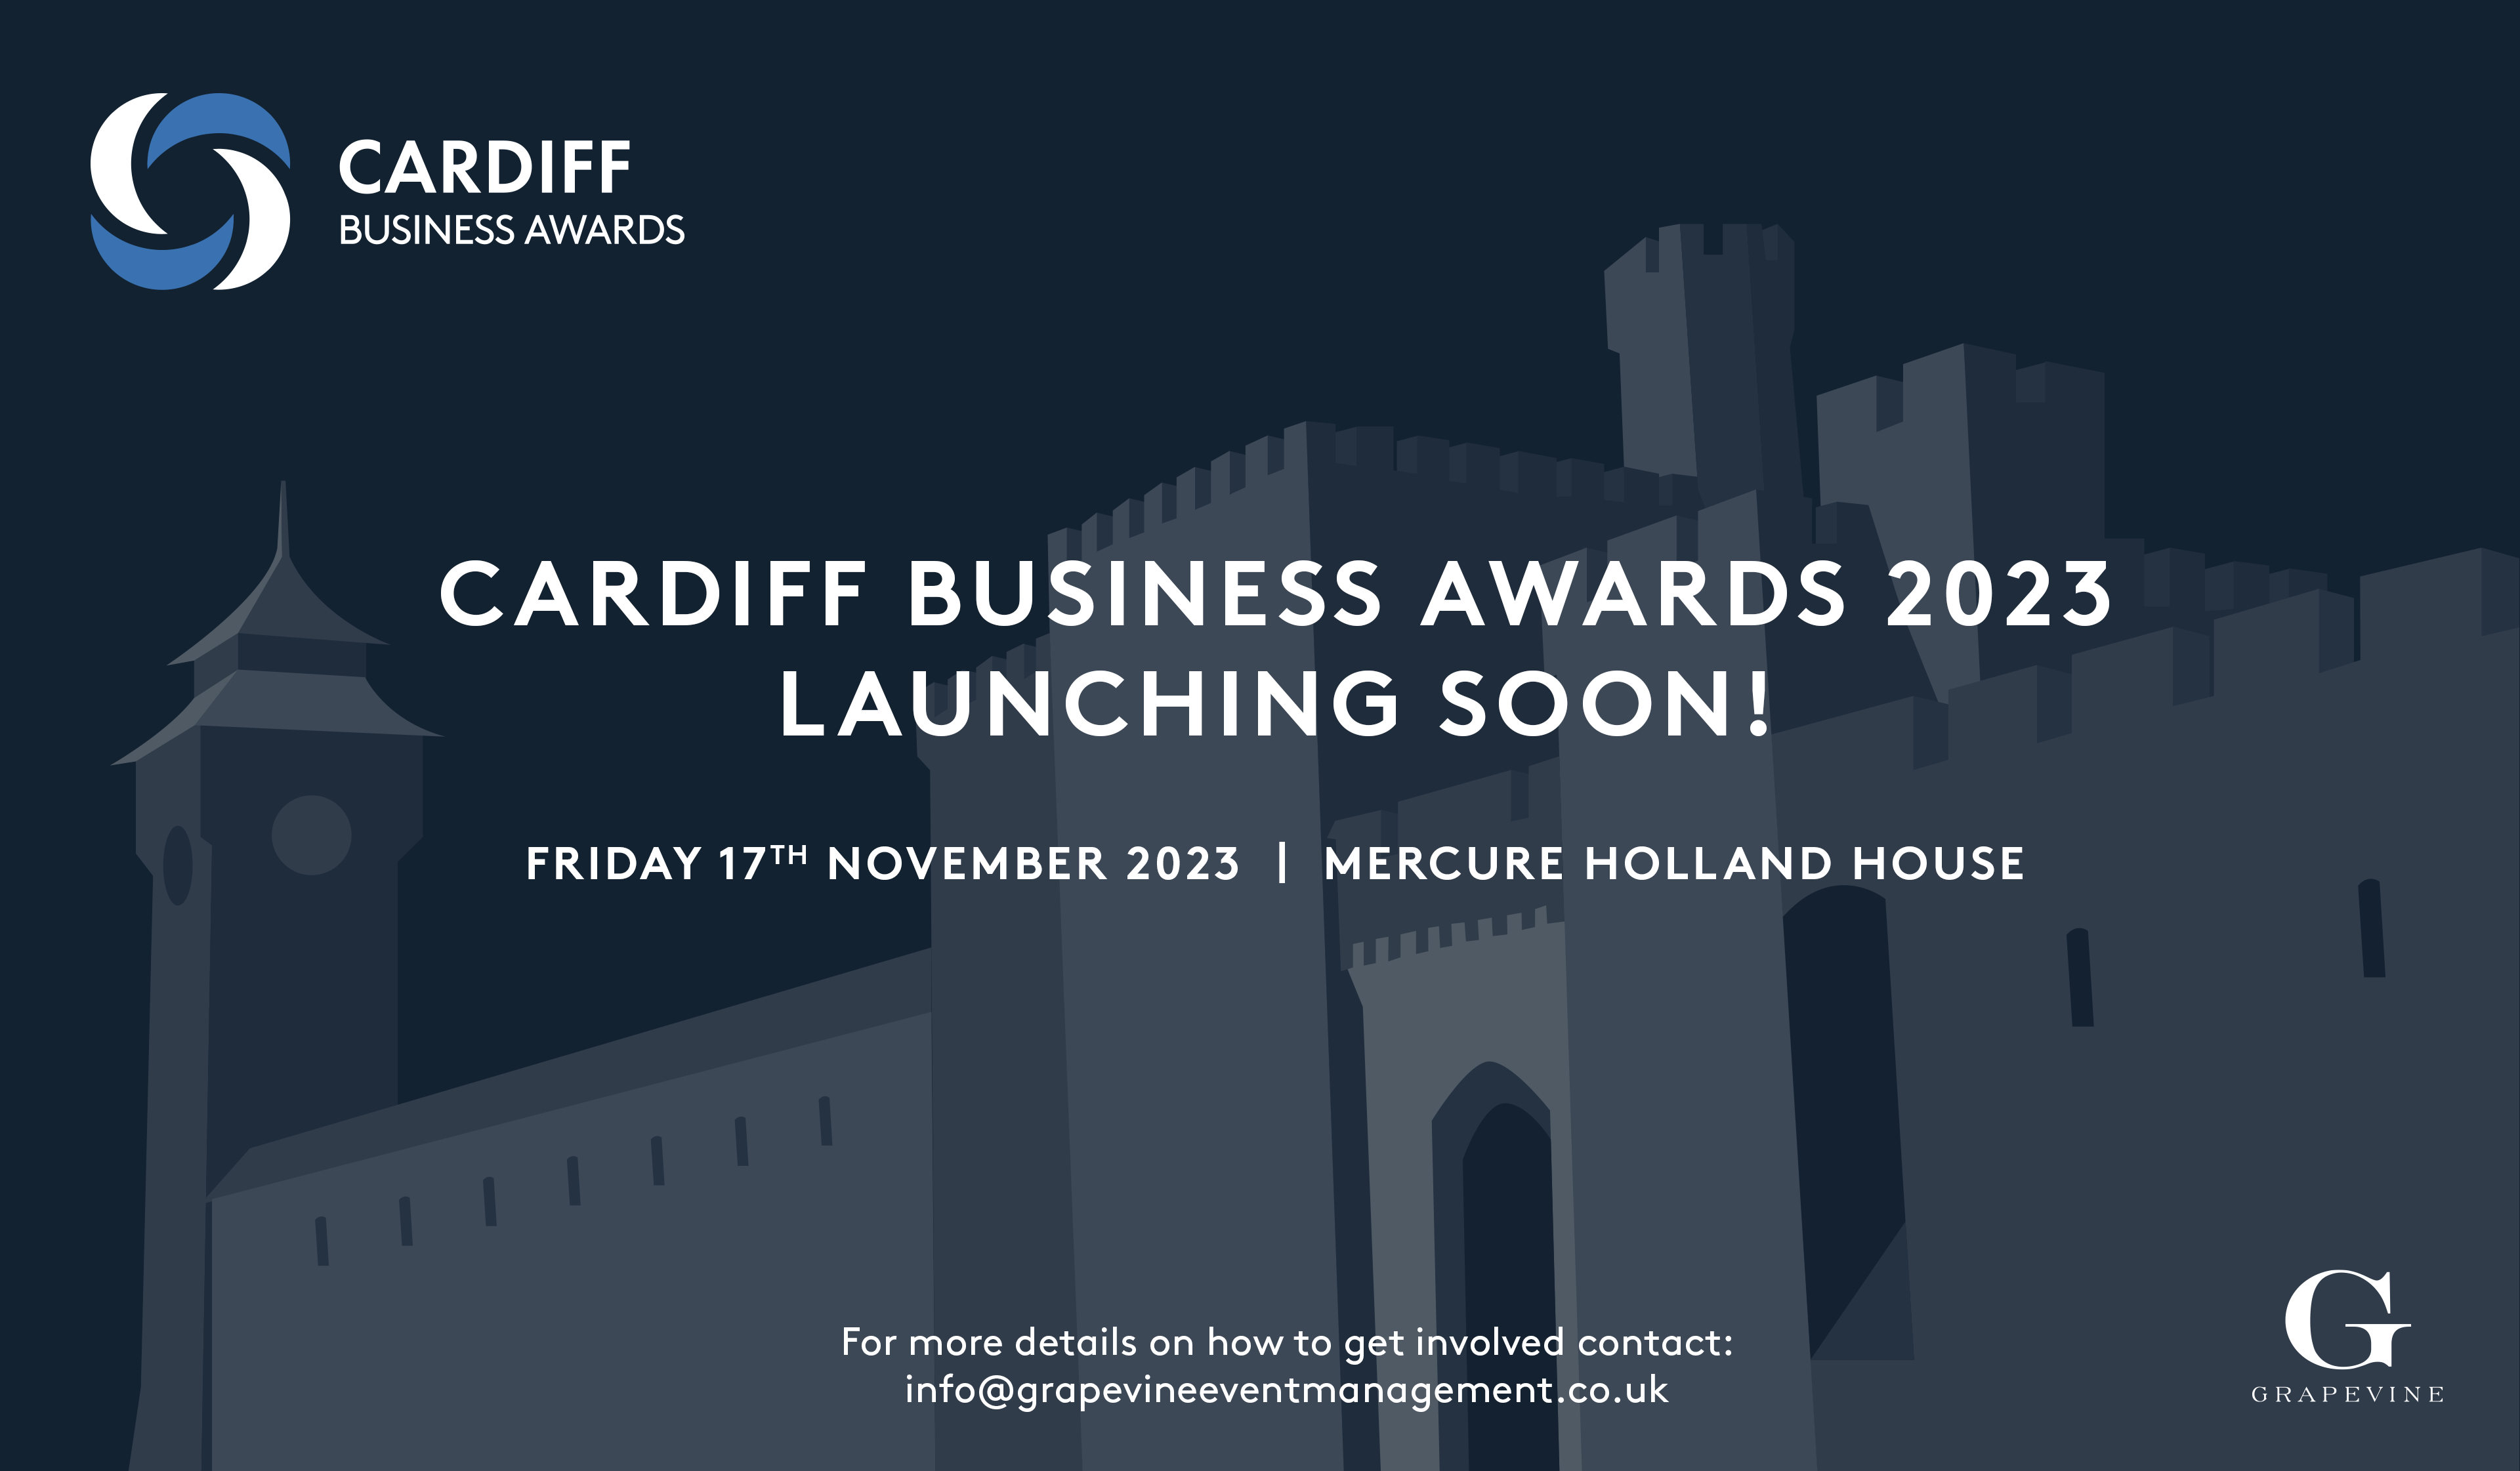 Cardiff Business Awards